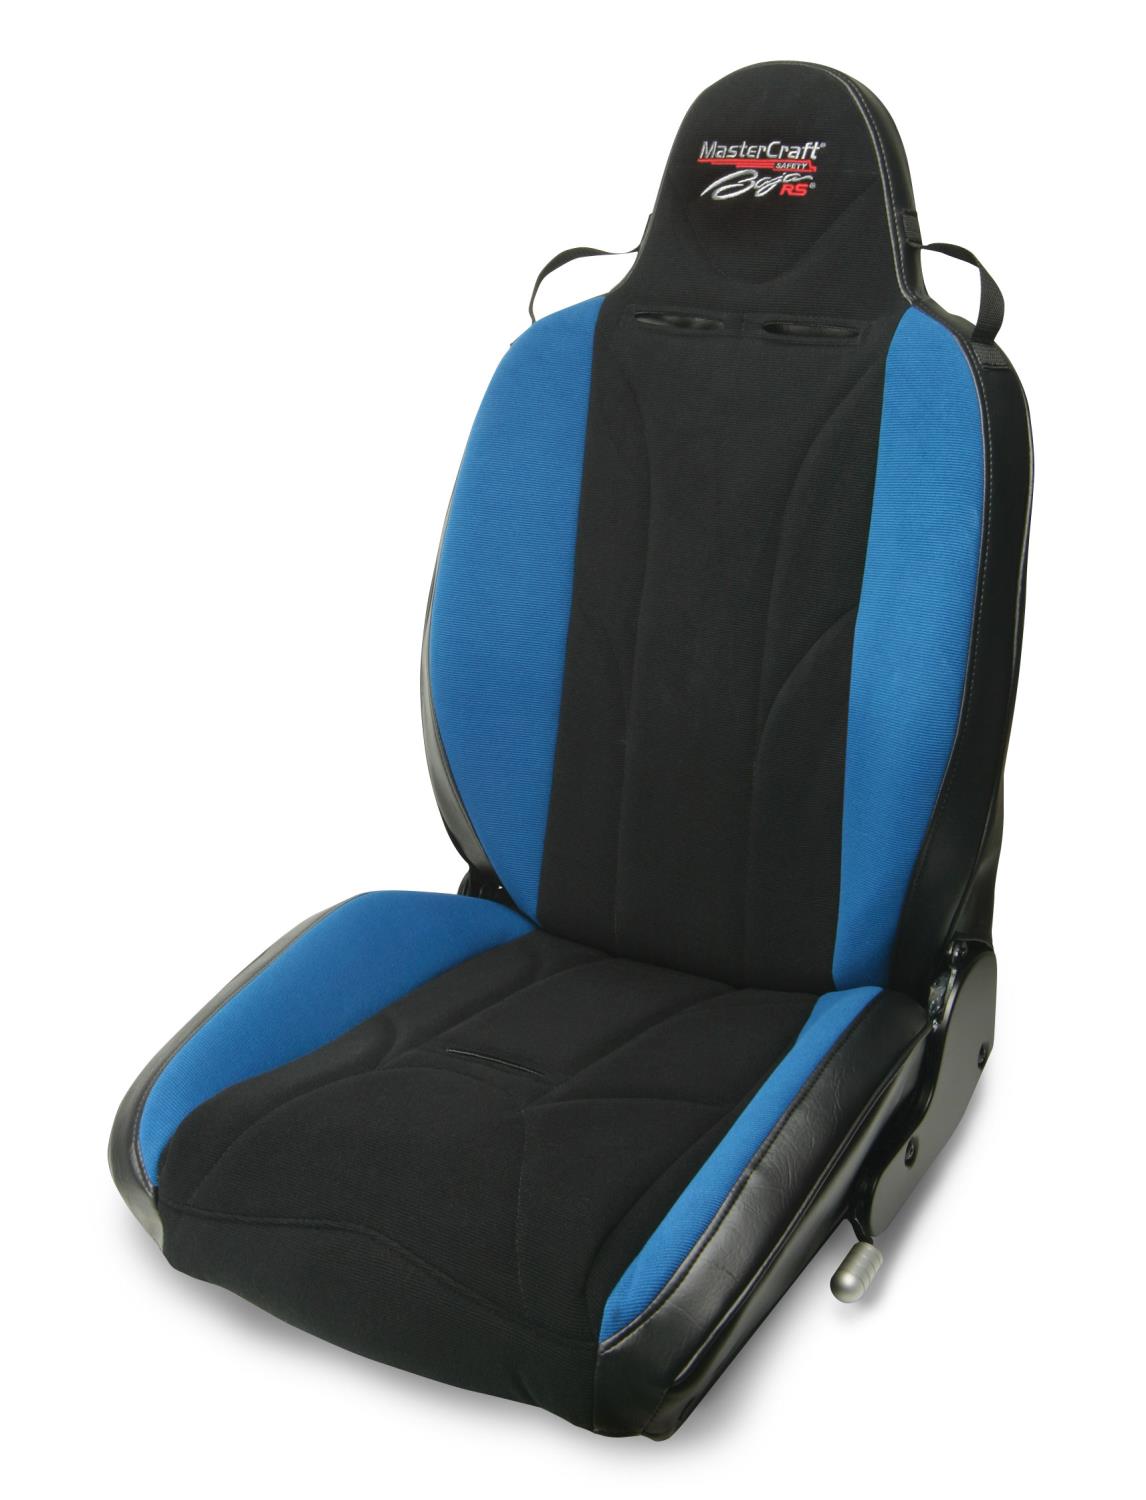 504023 MasterCraft Baja RS w/Fixed Headrest, Black w/Black Center & Blue Side Panels, Recliner Lever Left, w/BRS Stitch Pattern